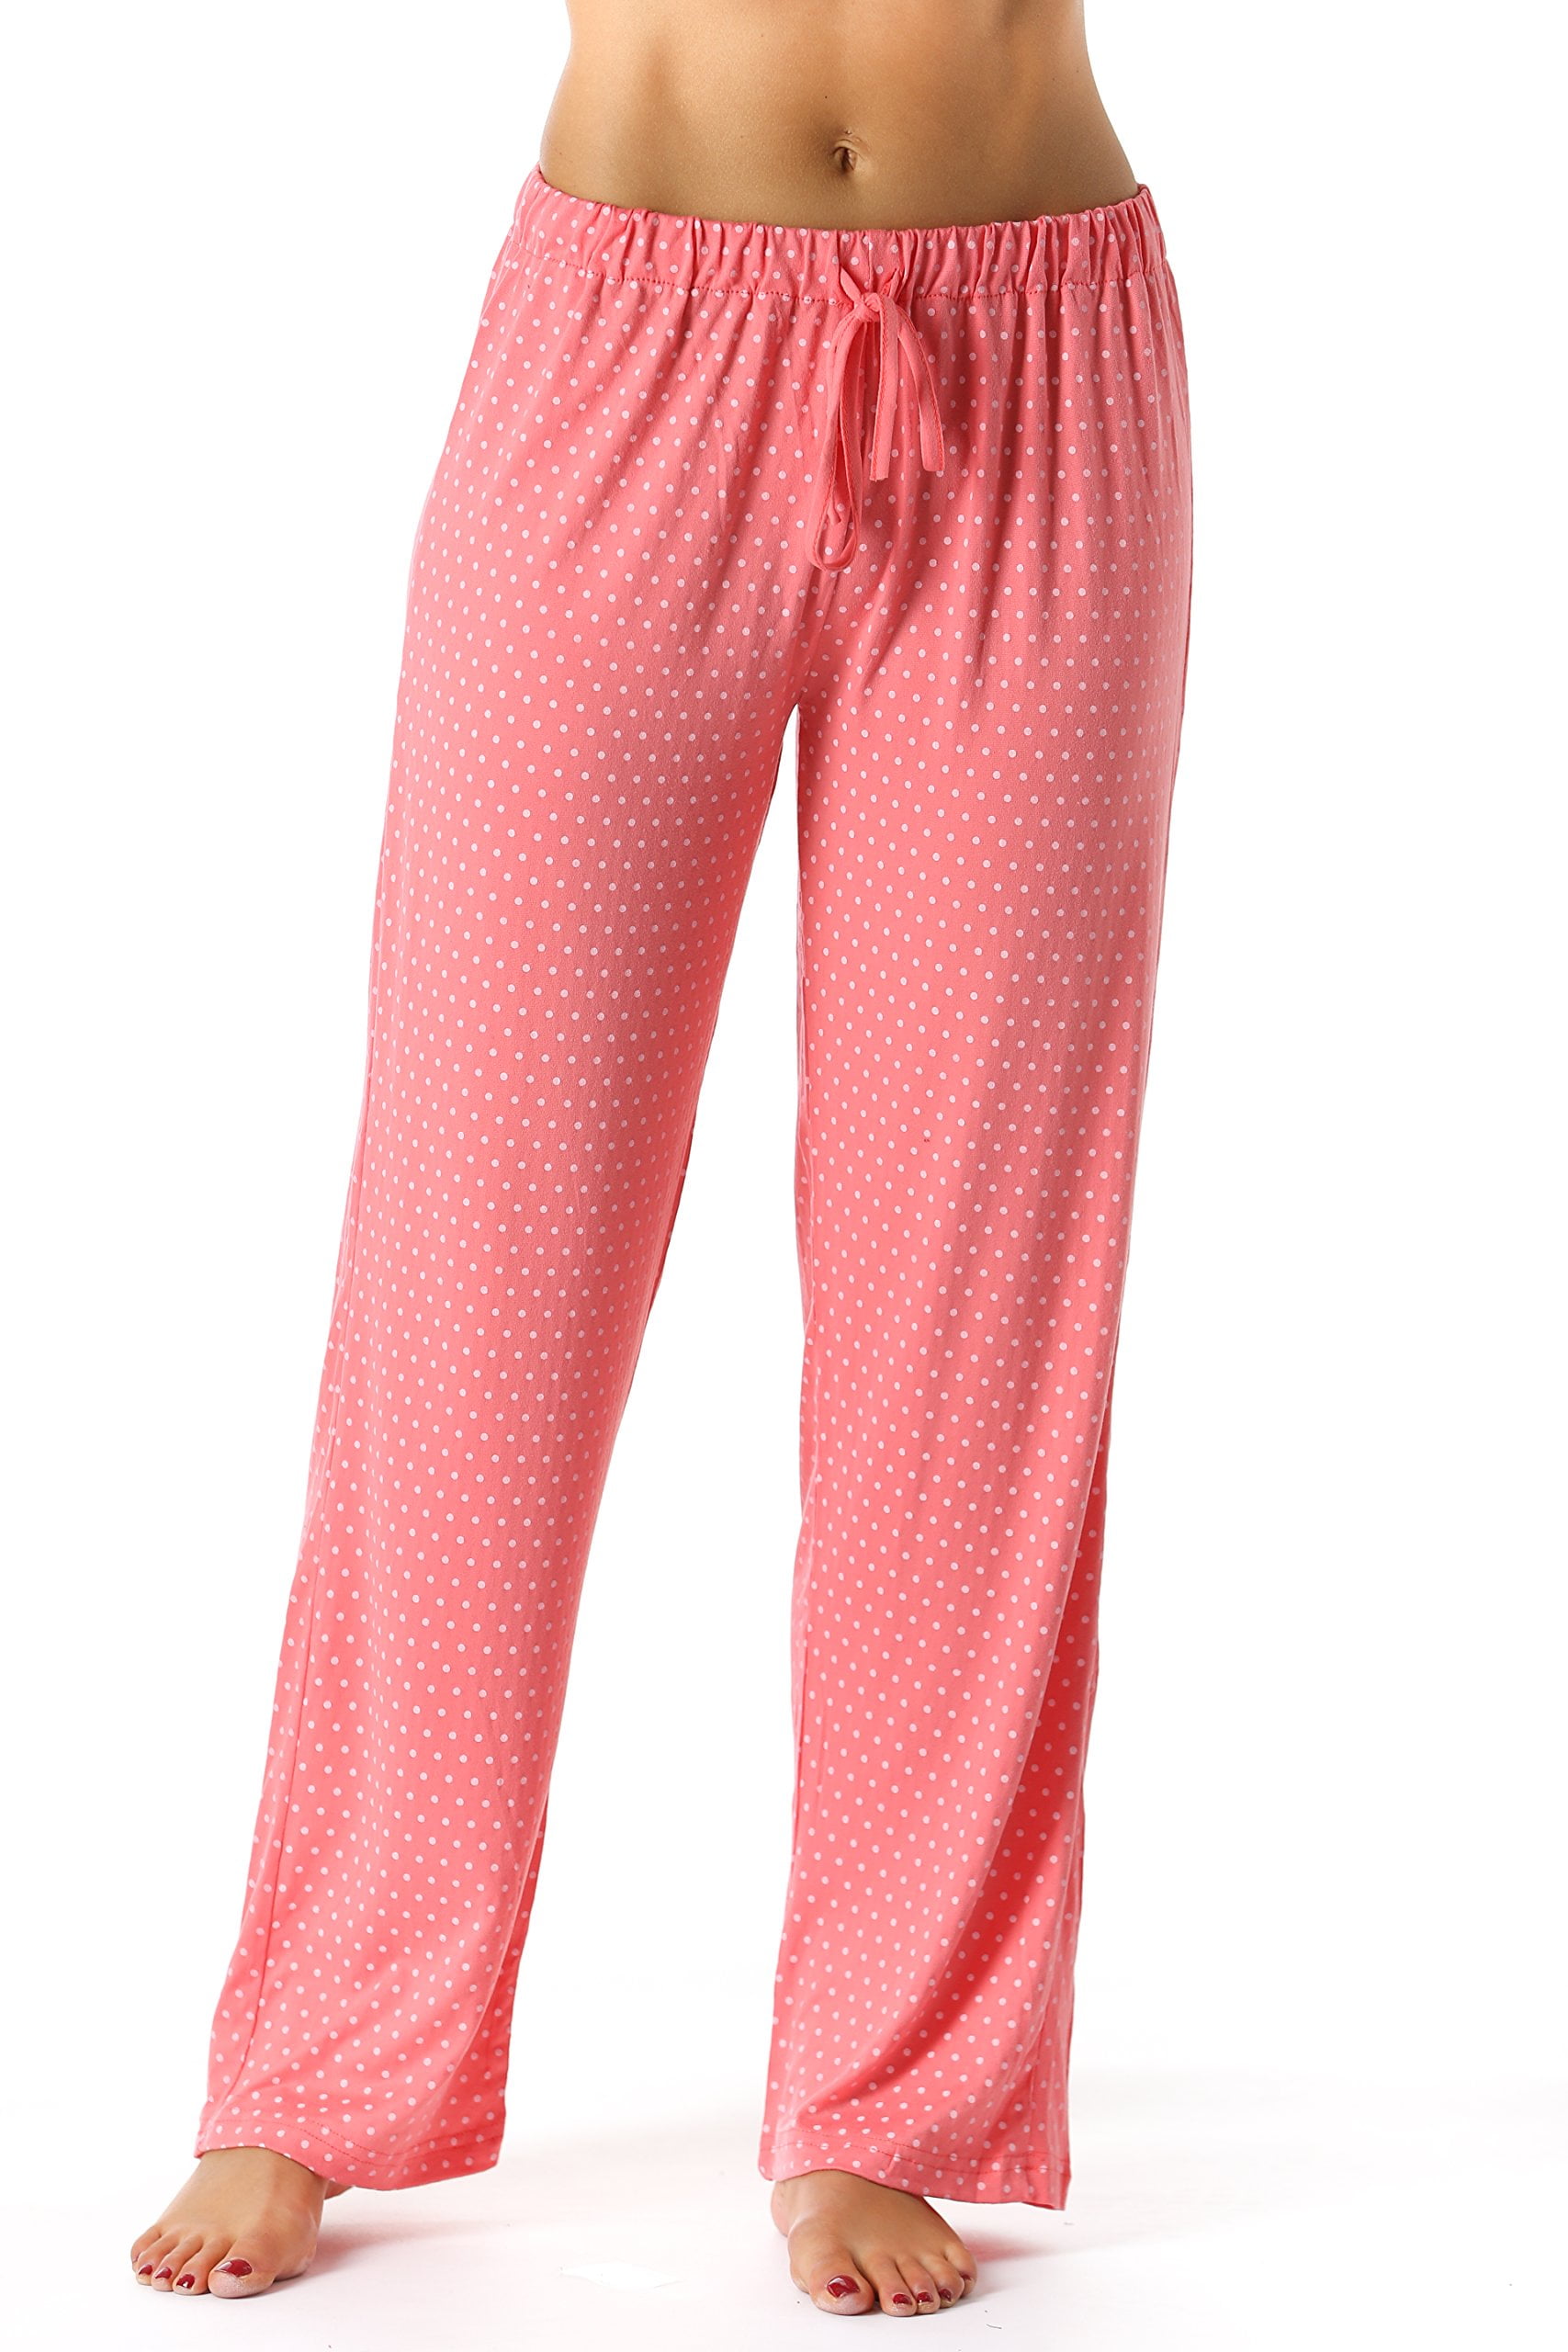 Buy Women & Girls Track Pant Lower Pajama Cotton Printed Lounge Wear Soft  Cotton Night Wear (Pack of 5… | Track pants women, Soft cotton pajamas,  Night wear pajamas